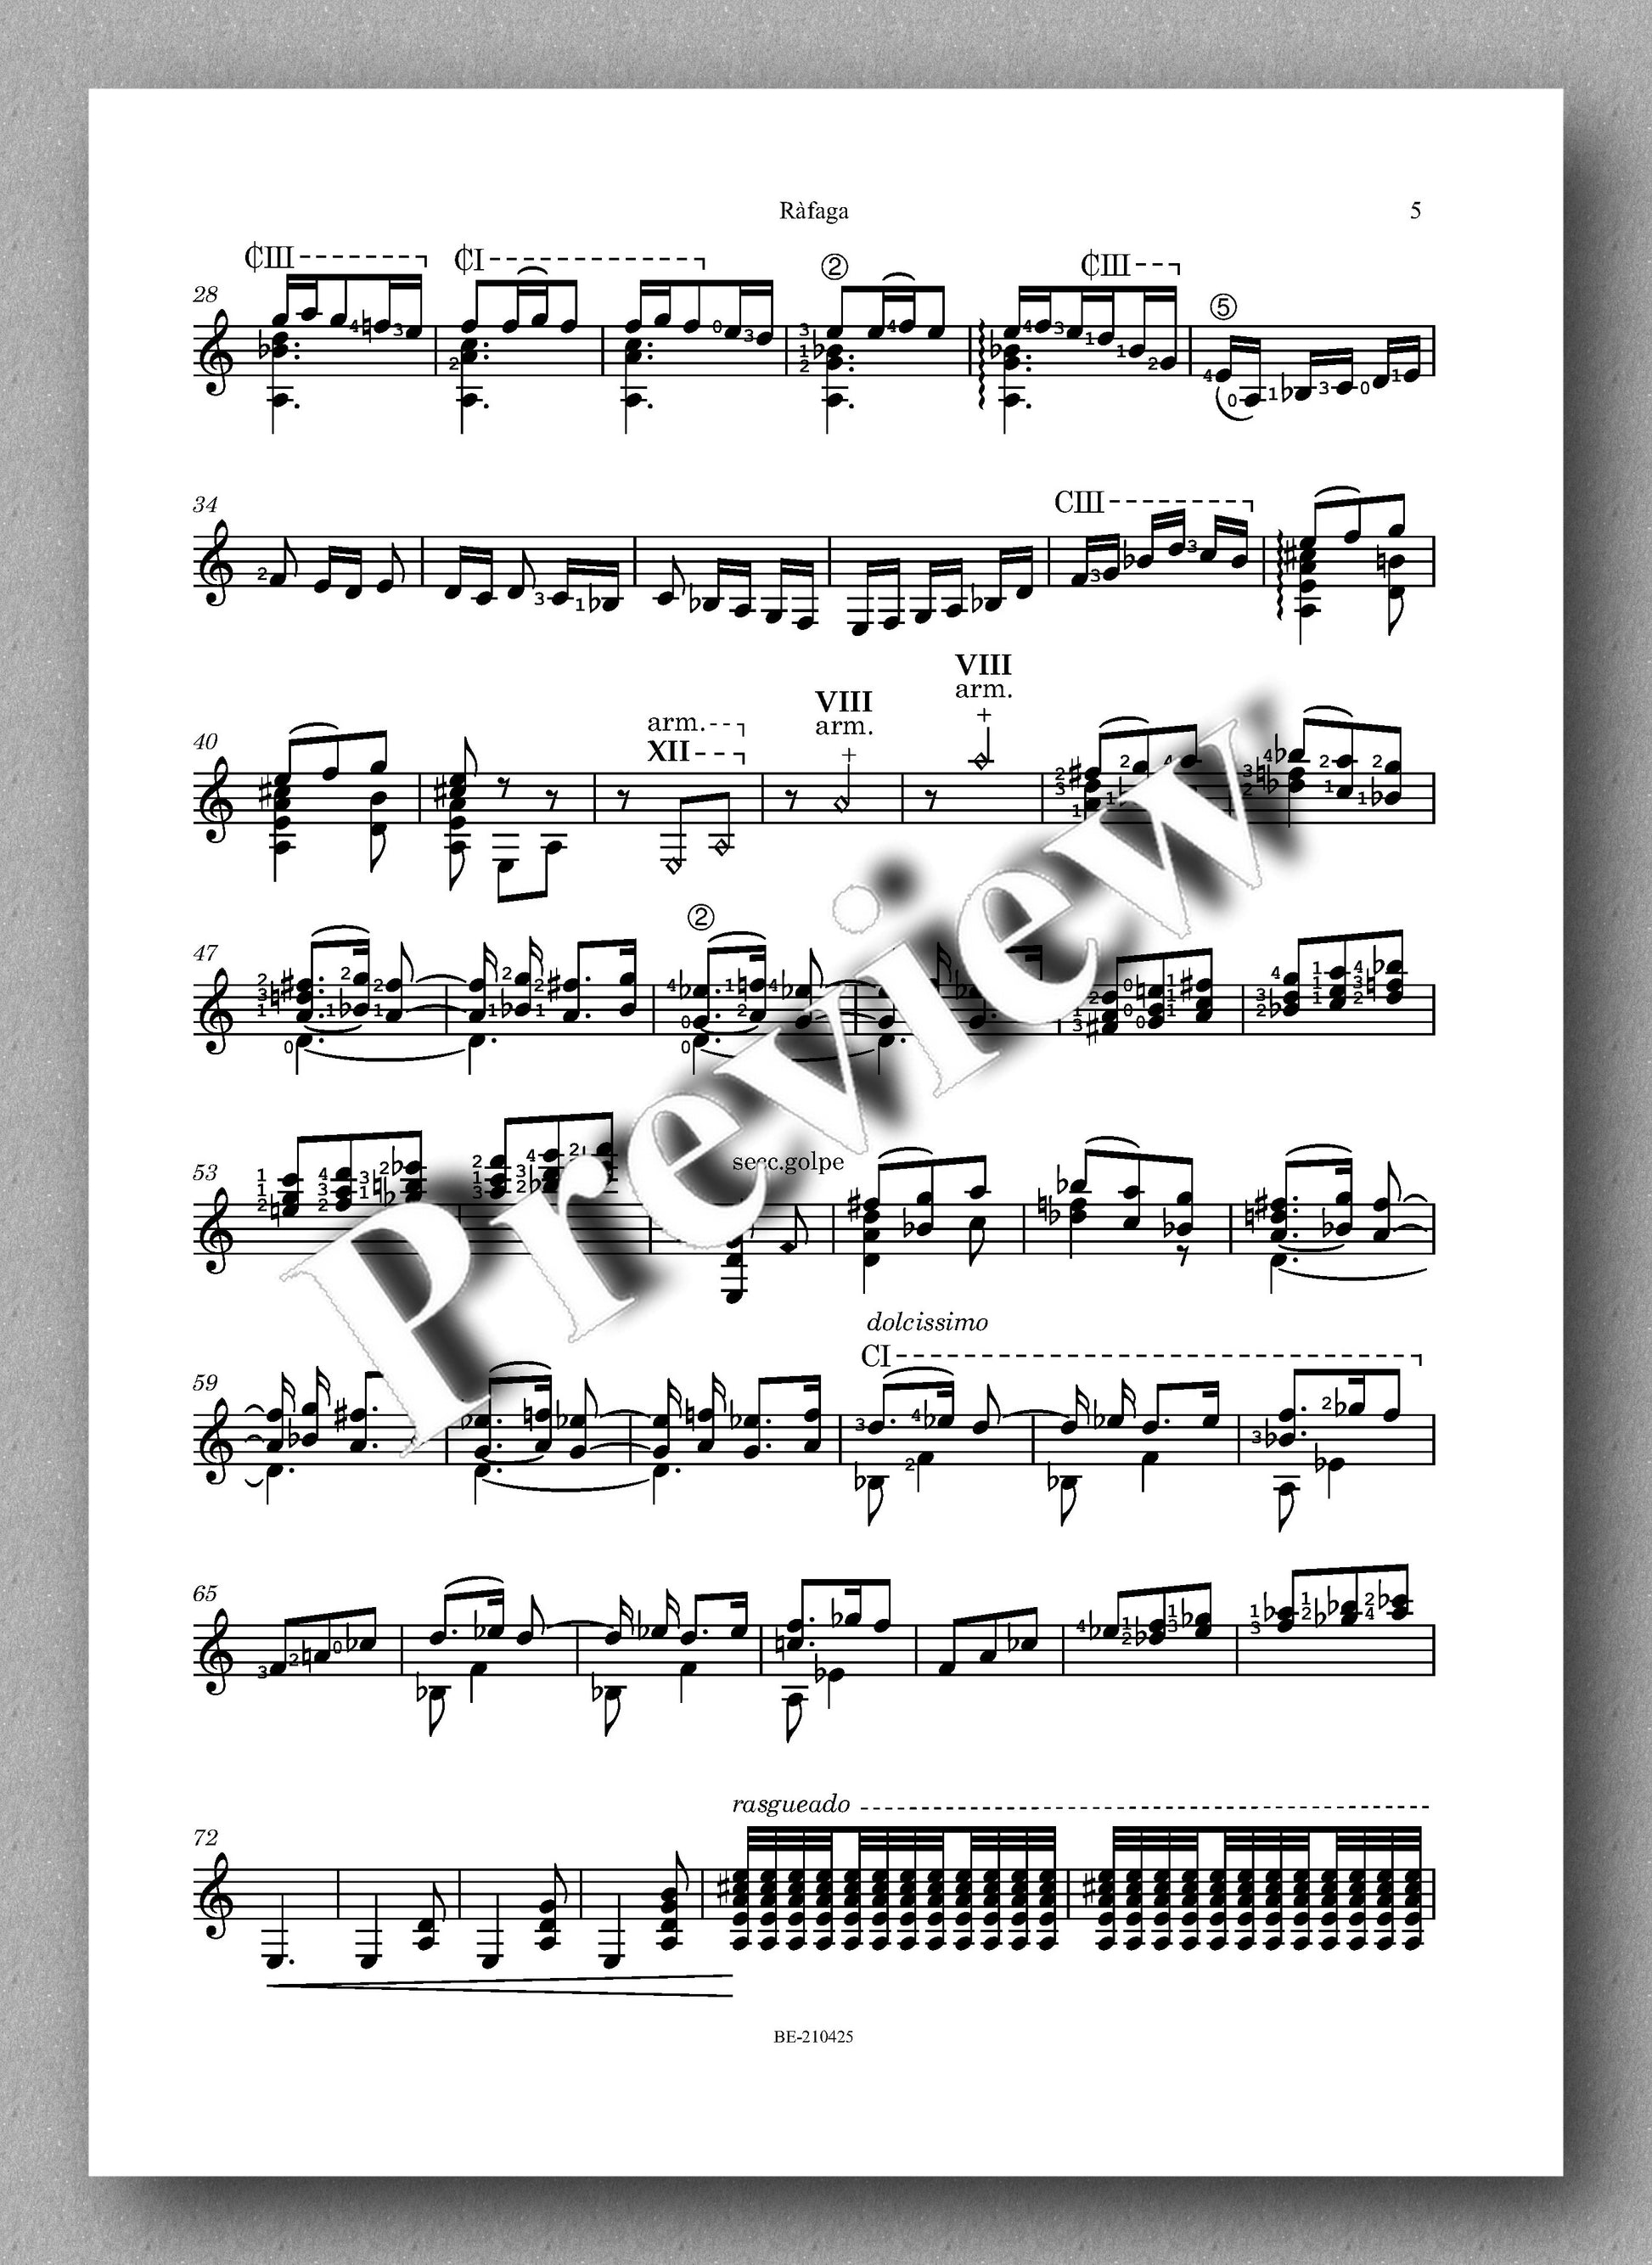 Turina-Rasmussen, Ràfaga - music score 2